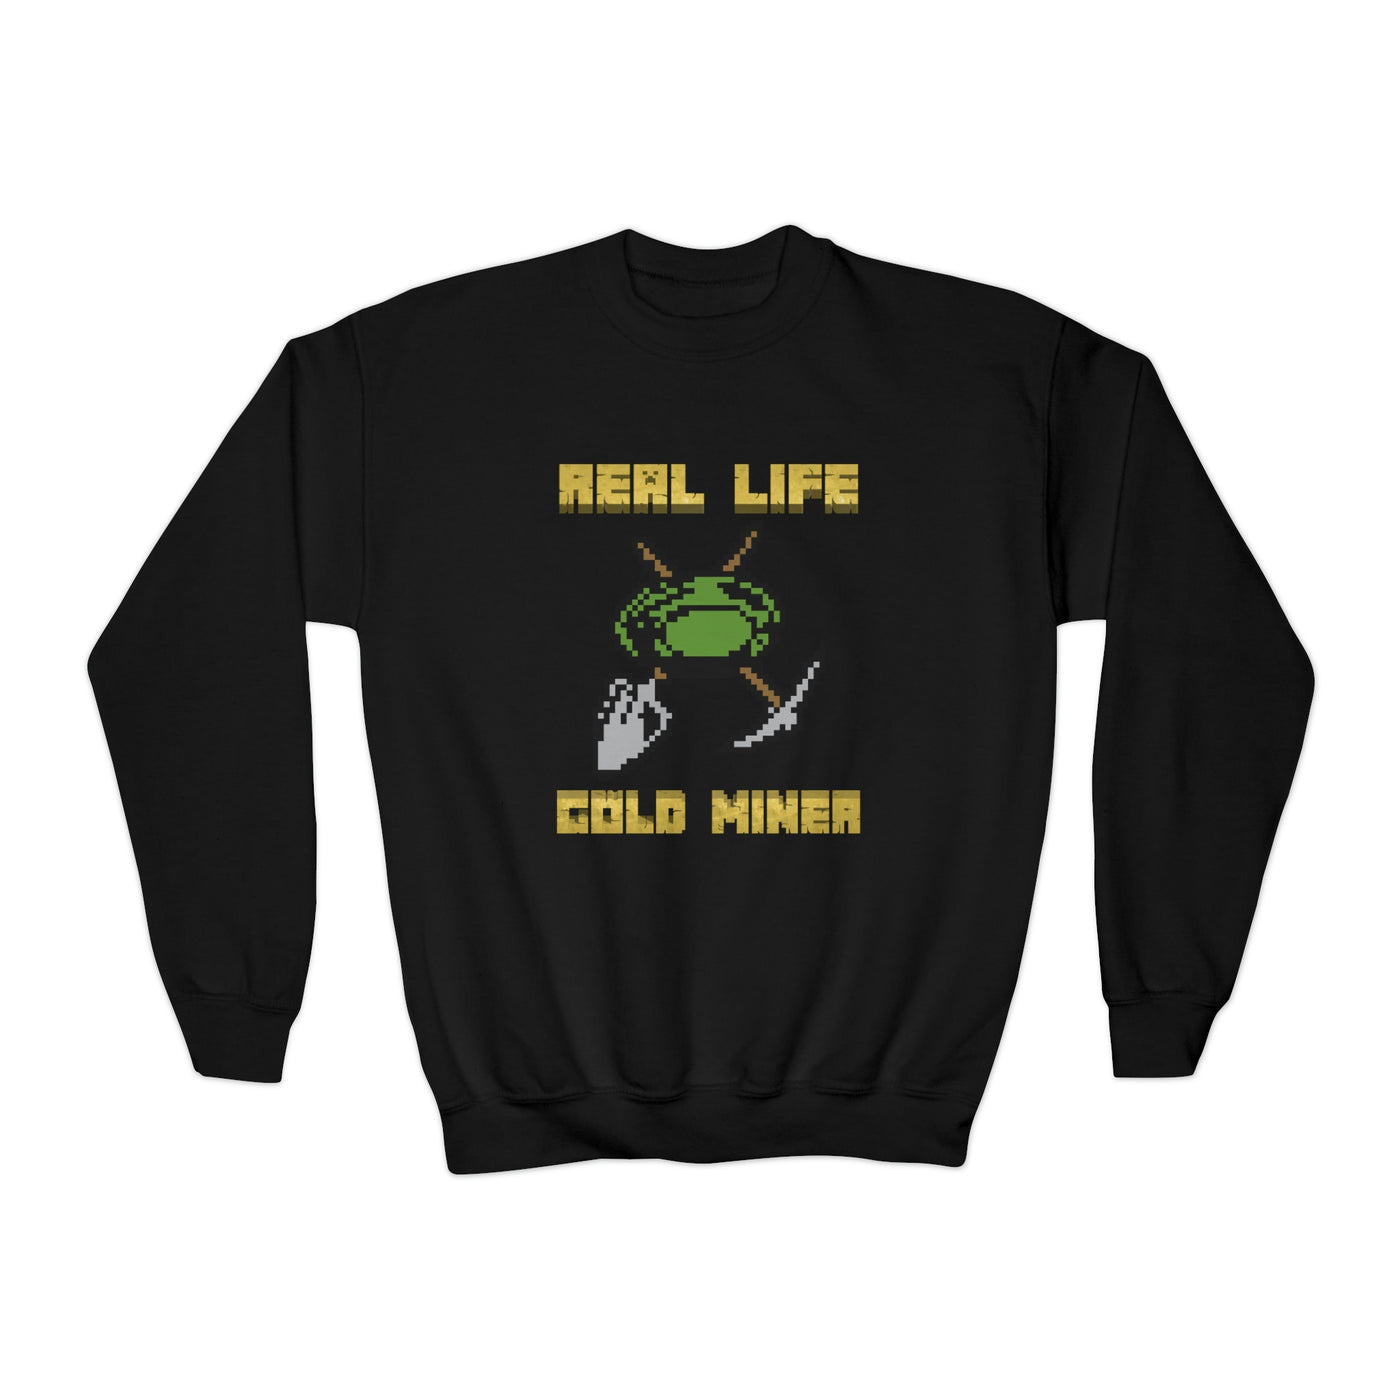 Real Life Gold Miner - Youth Crewneck Sweatshirt